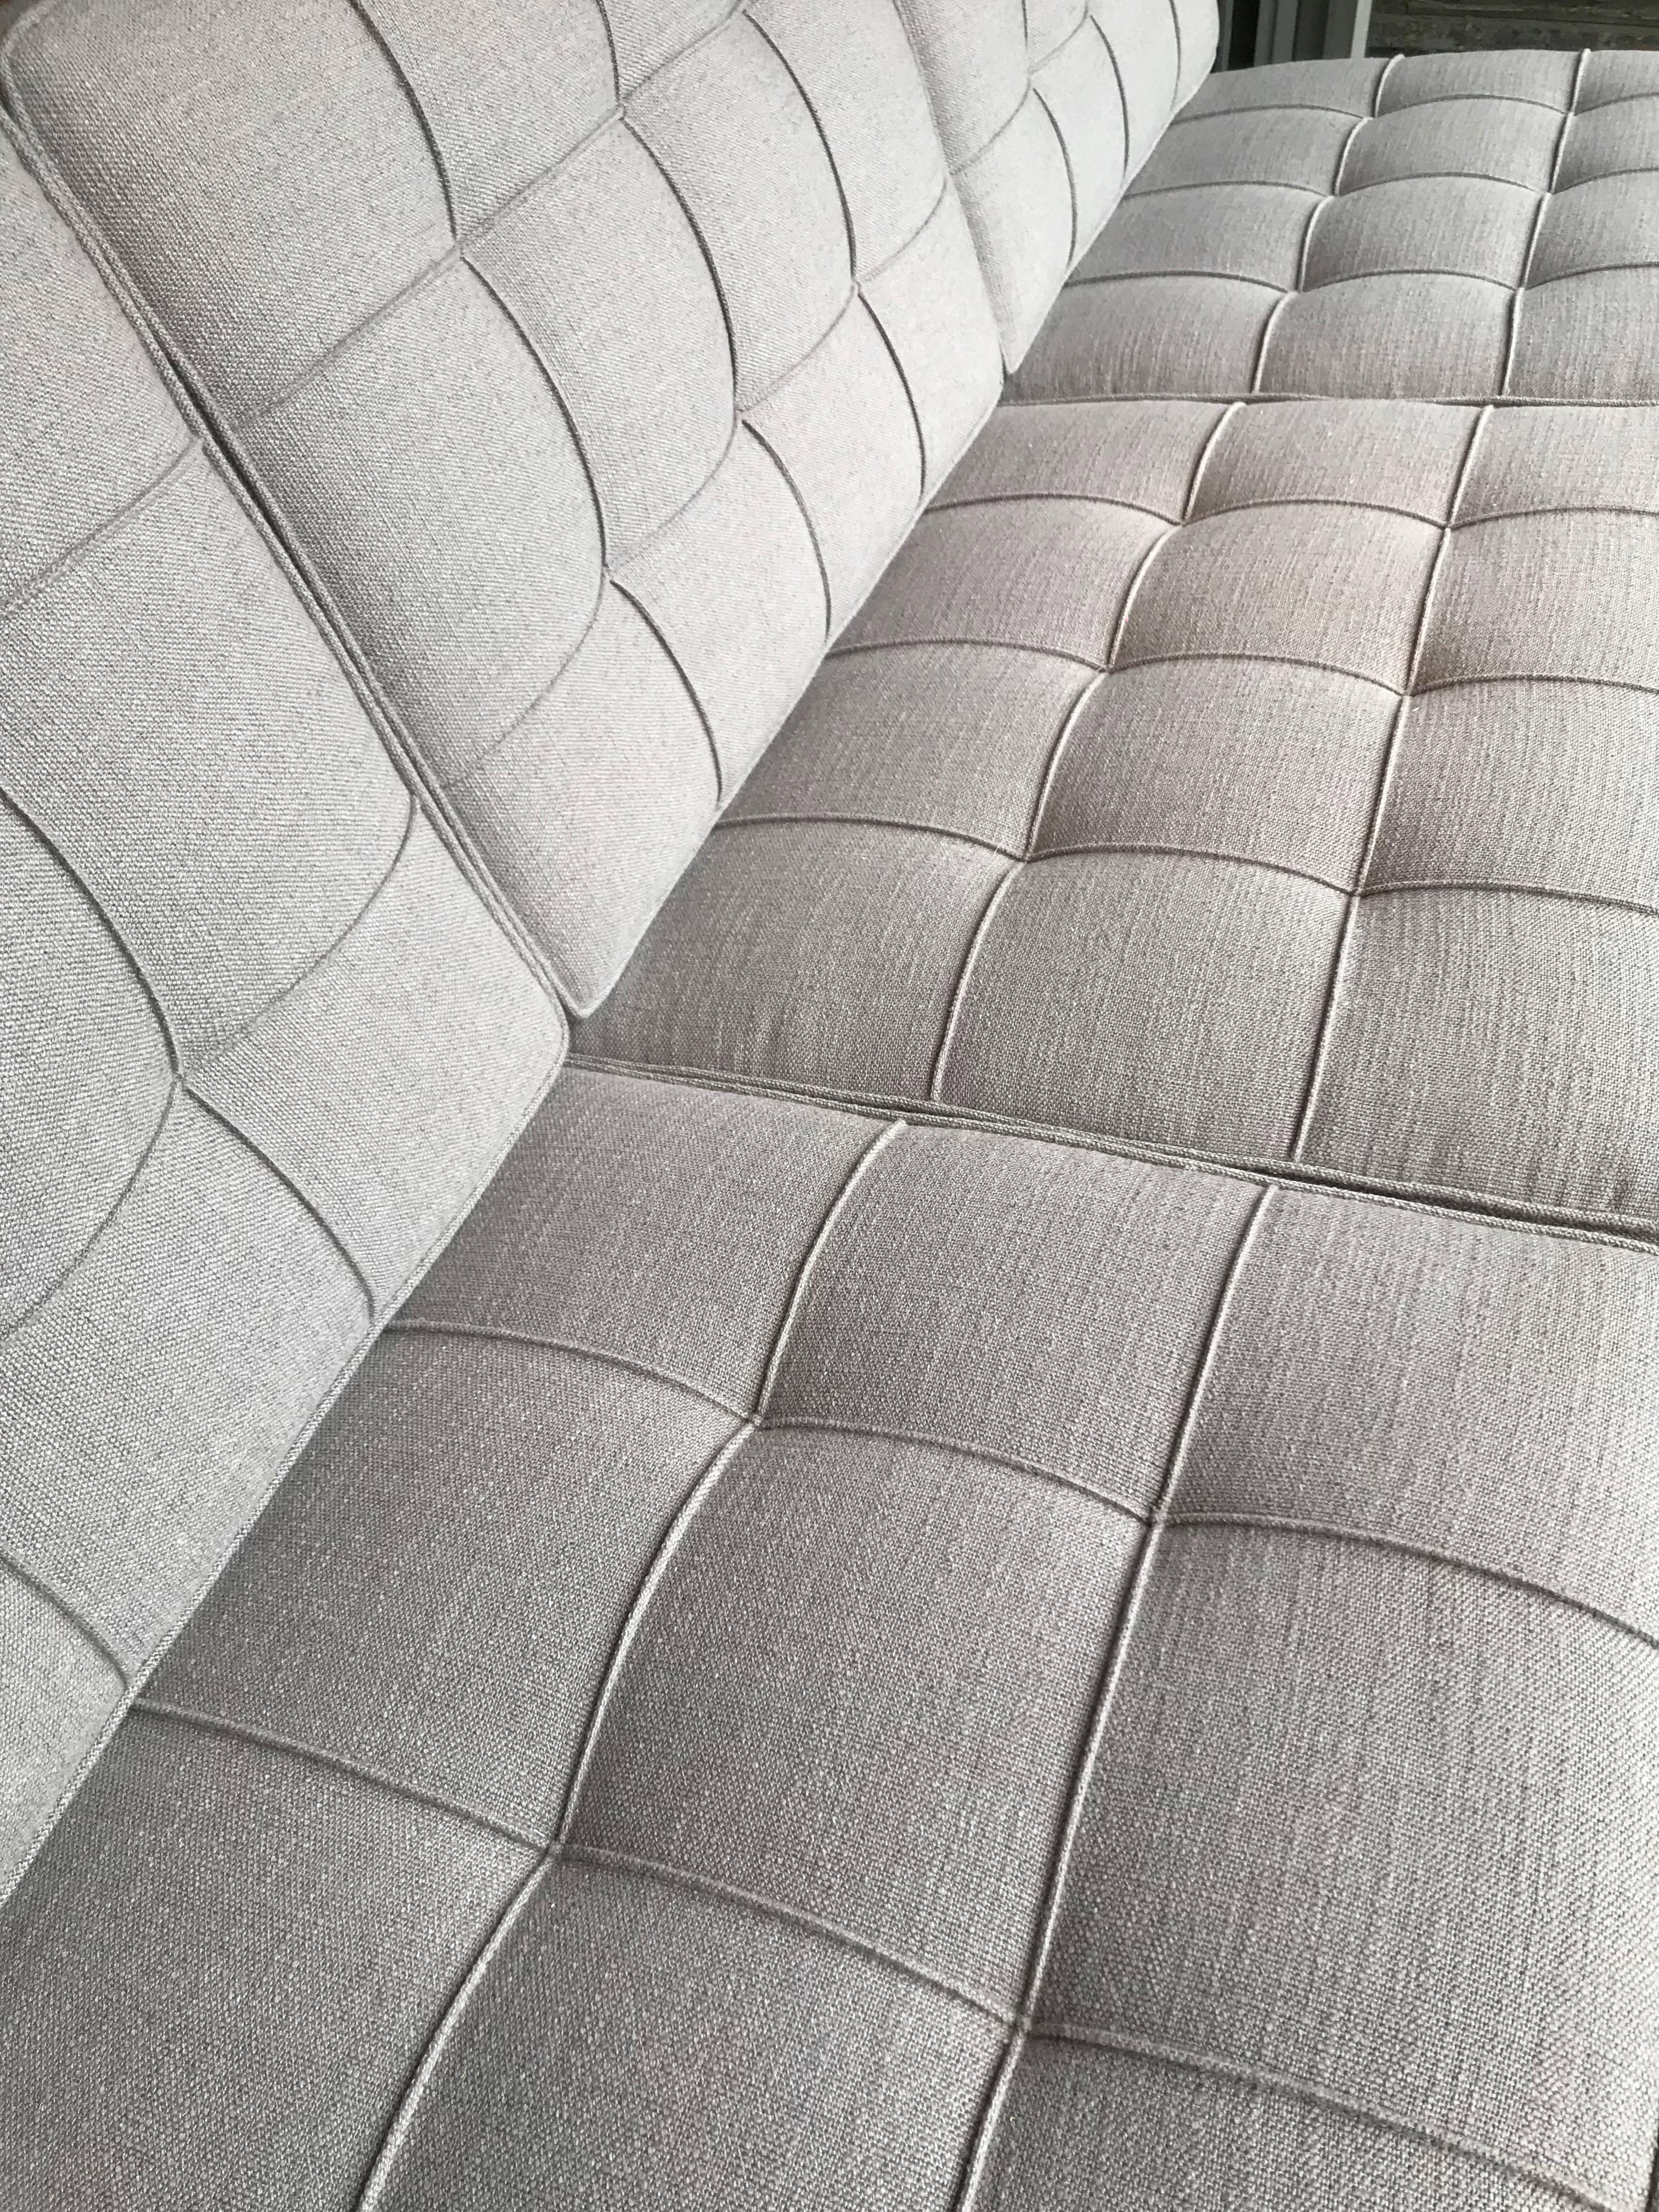 Florence Knoll Upholstered Three-Seat Armless Sofa 1